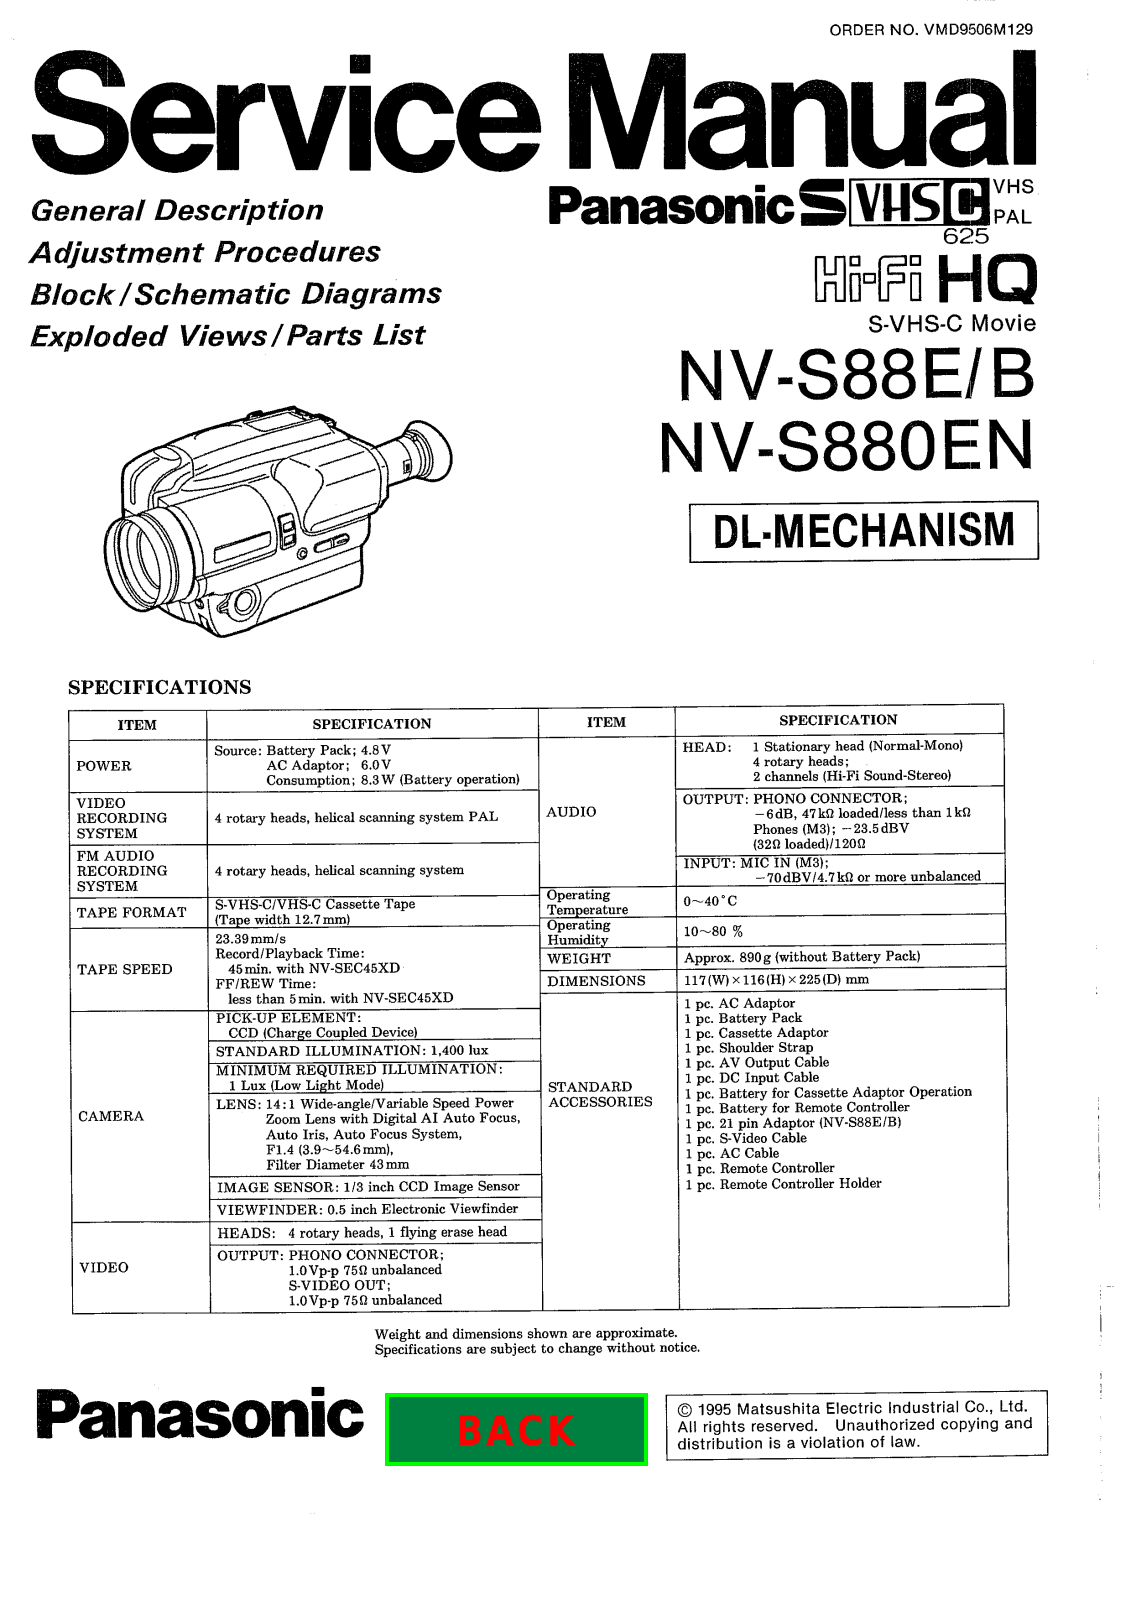 Panasonic NV-S88, NV-S880 Service Manual